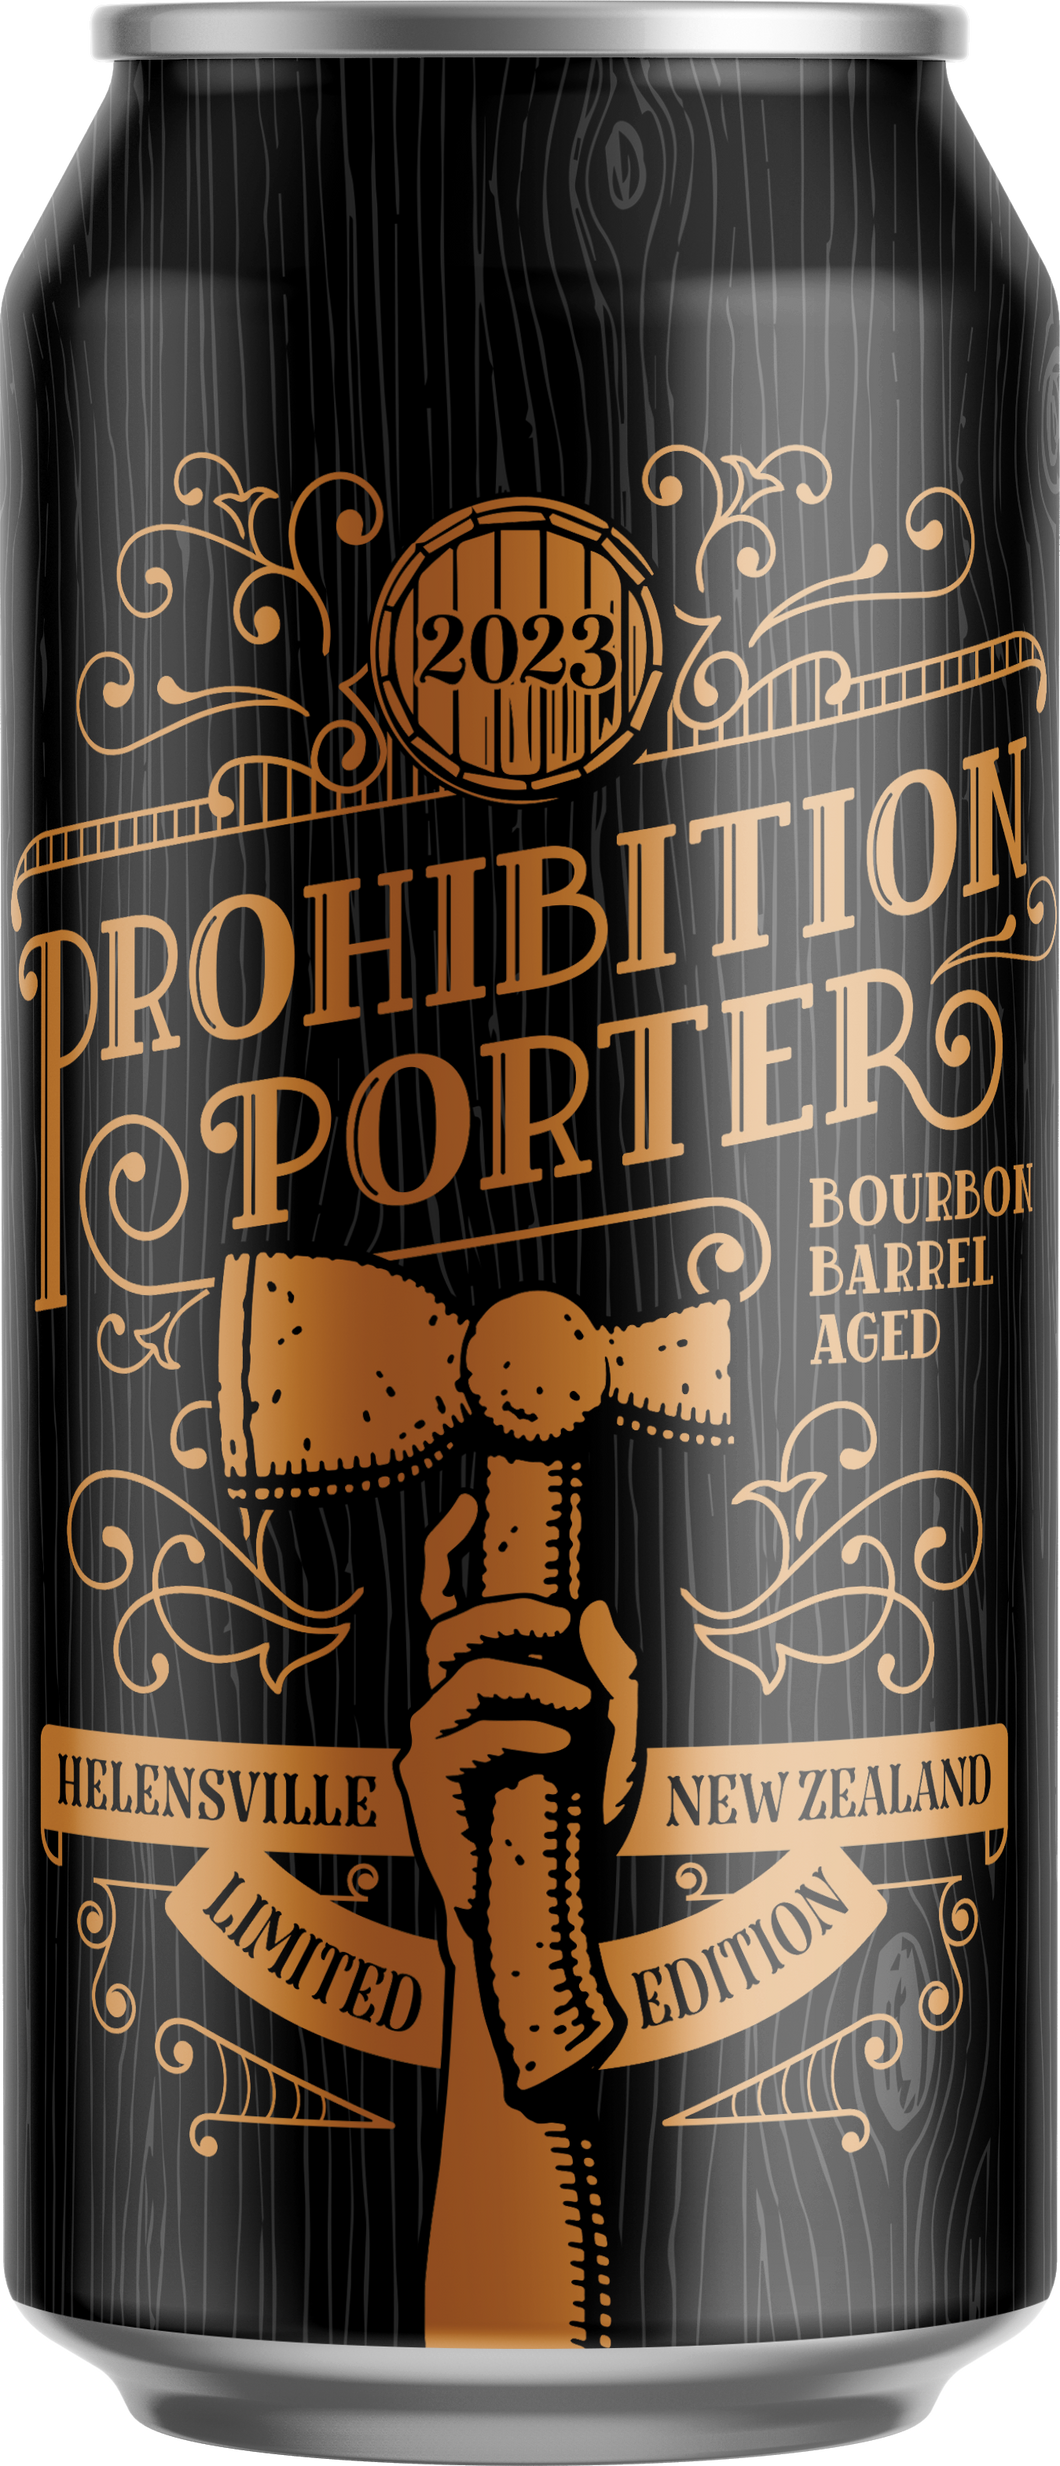 Prohibition Porter (2023 vintage)